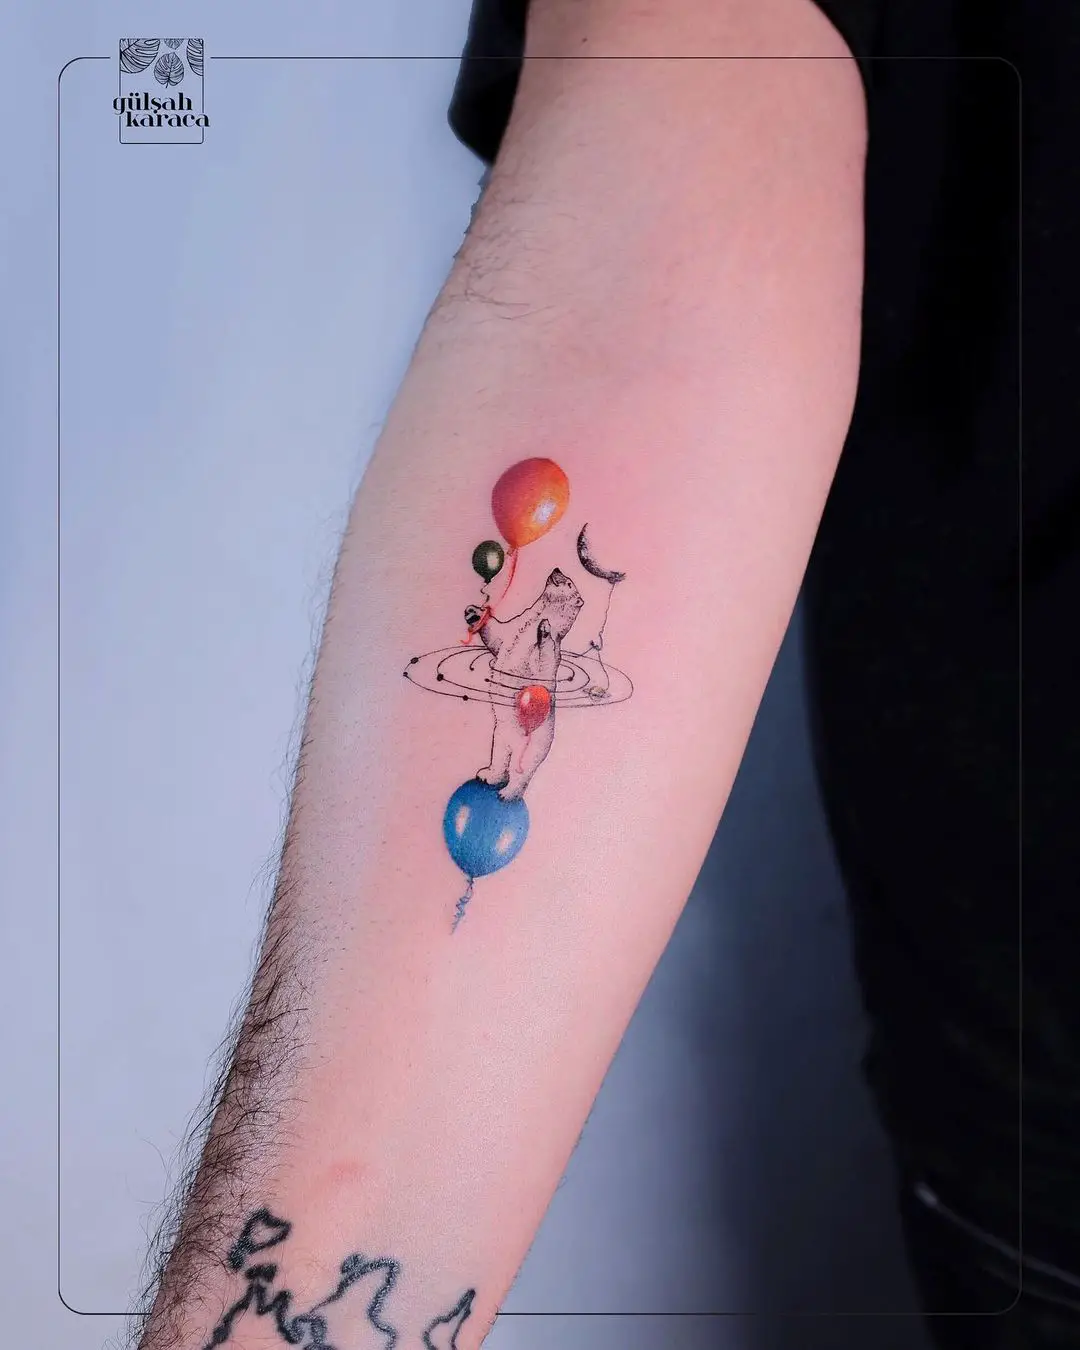 watercolor balloon tattoo by gullsahkaraca